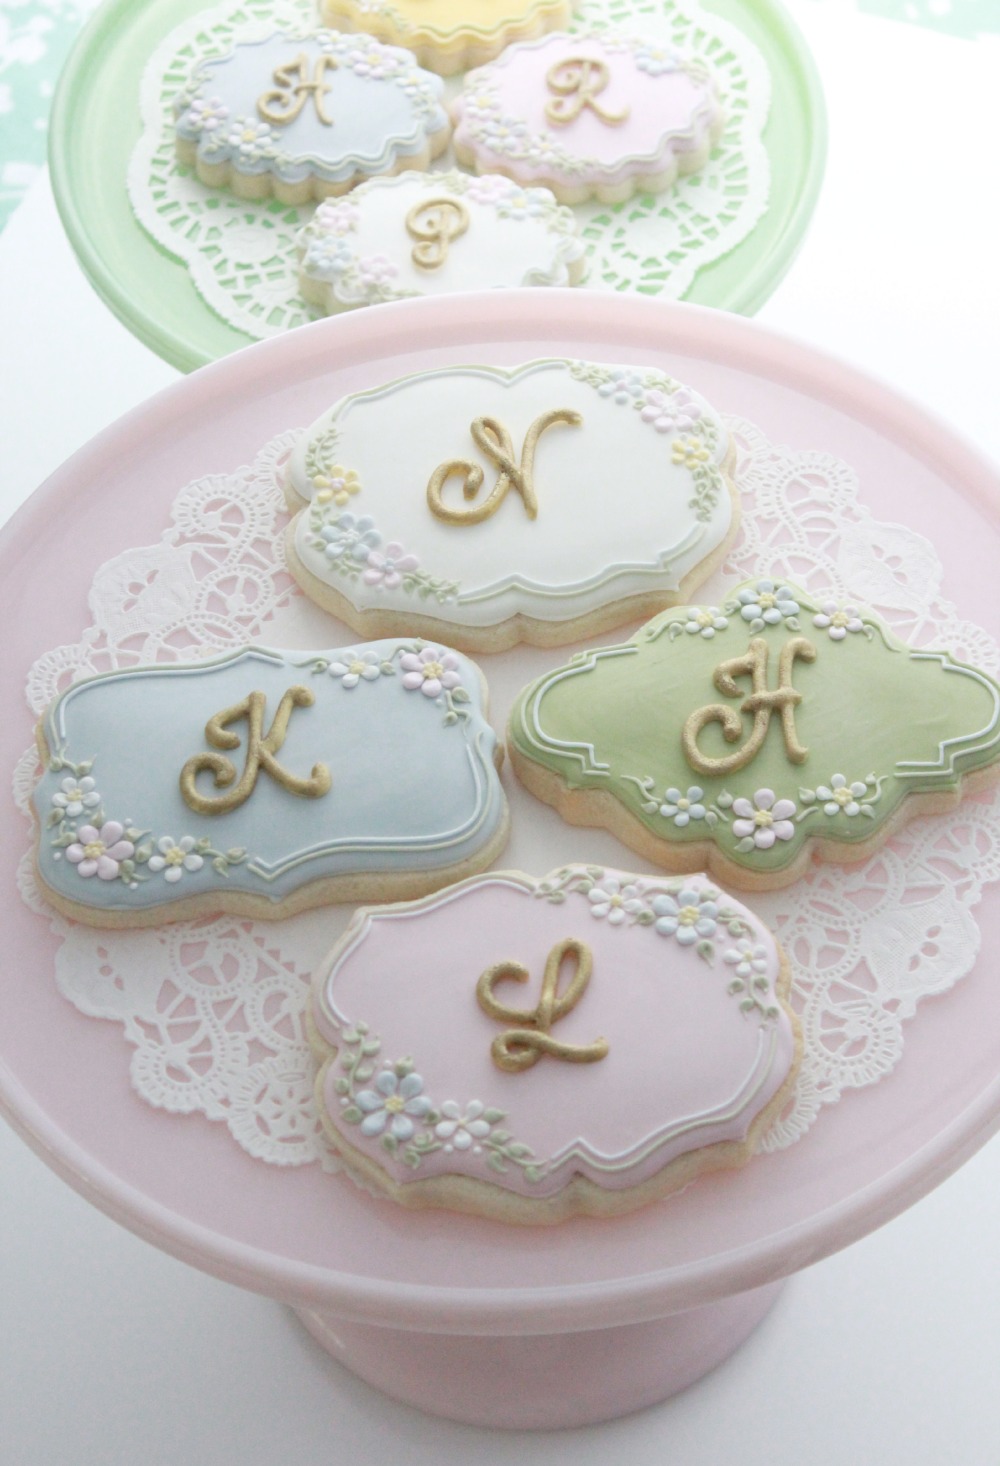 https://sweetopia.net/wp-content/uploads/2014/09/lettered-cookies-sweetopia.jpg